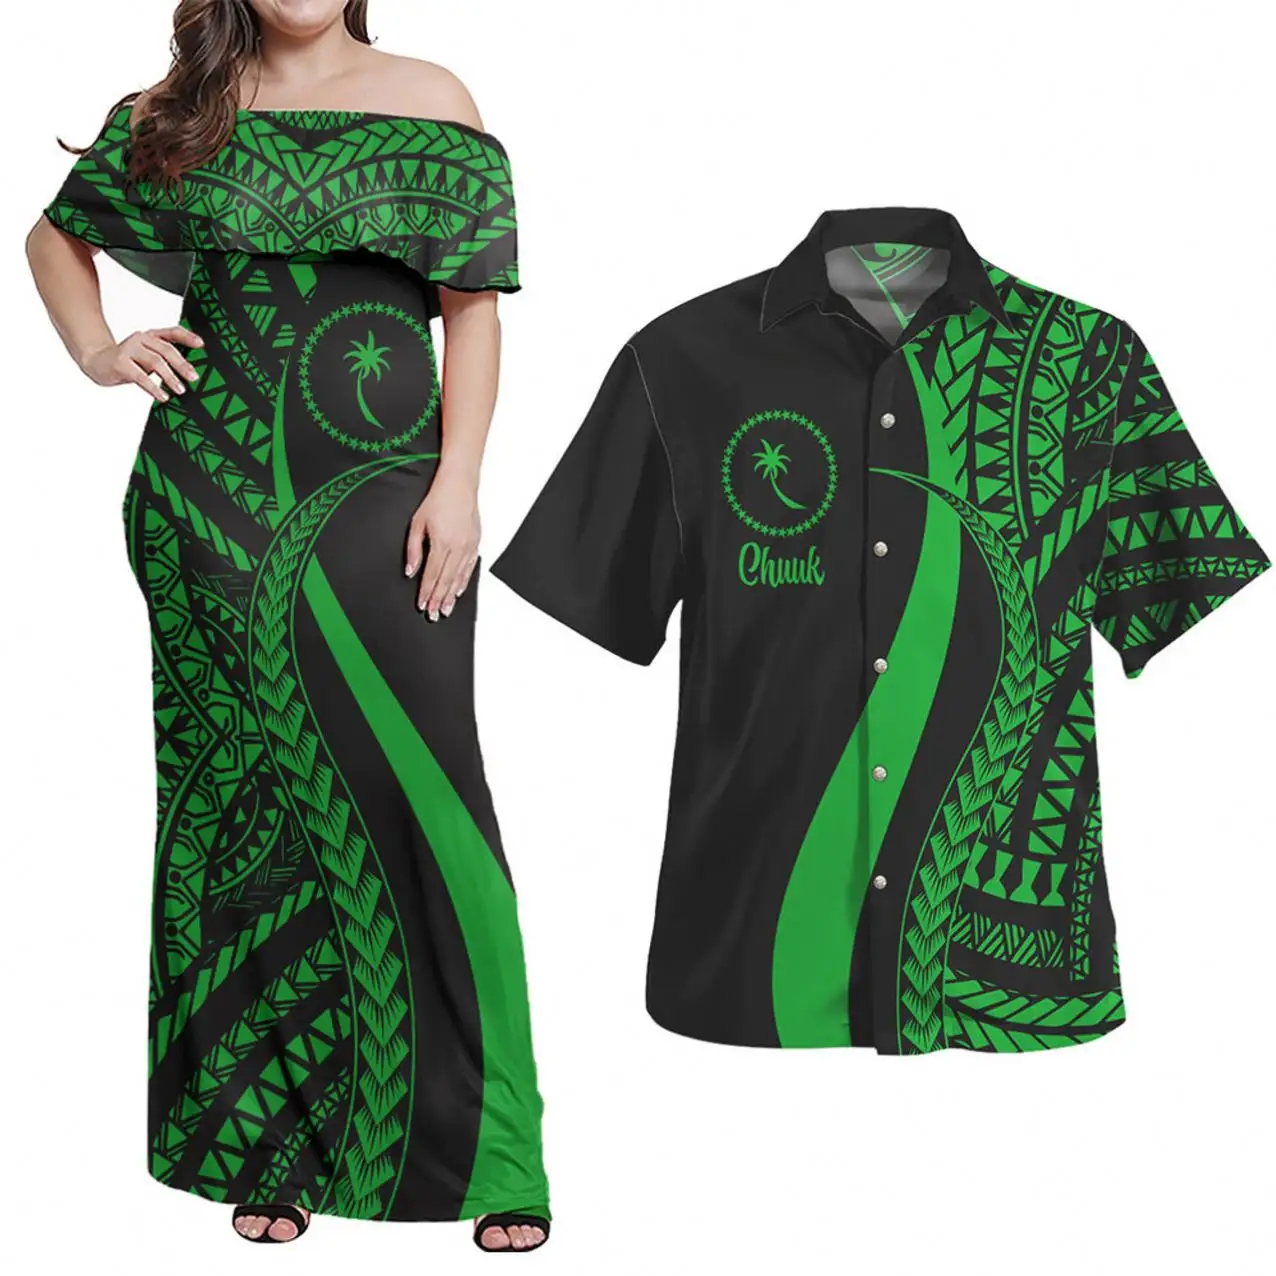 Chuuk 콤보 원피스 셔츠 Micronesian 부족 패턴 녹색 숙녀 드레스 남자의 하와이 셔츠 드롭 배송 의류 세트